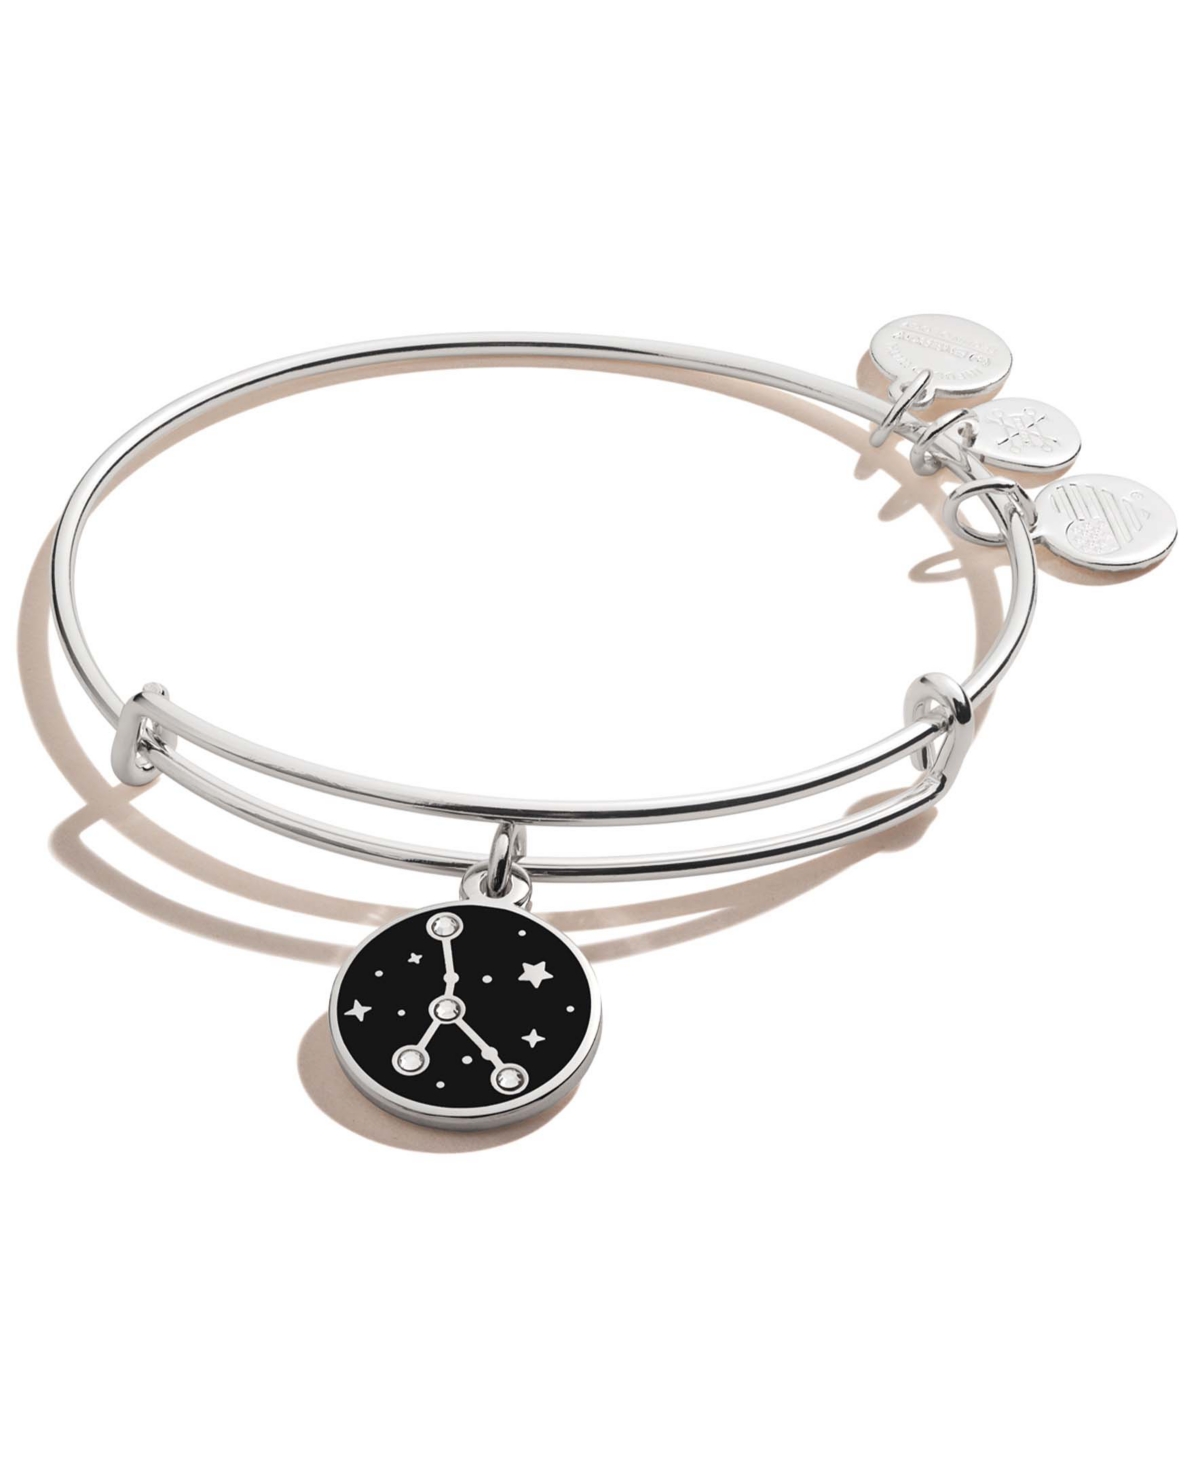 Alex and Ani Silver-Tone Zodiac Charm Bangle Bracelet